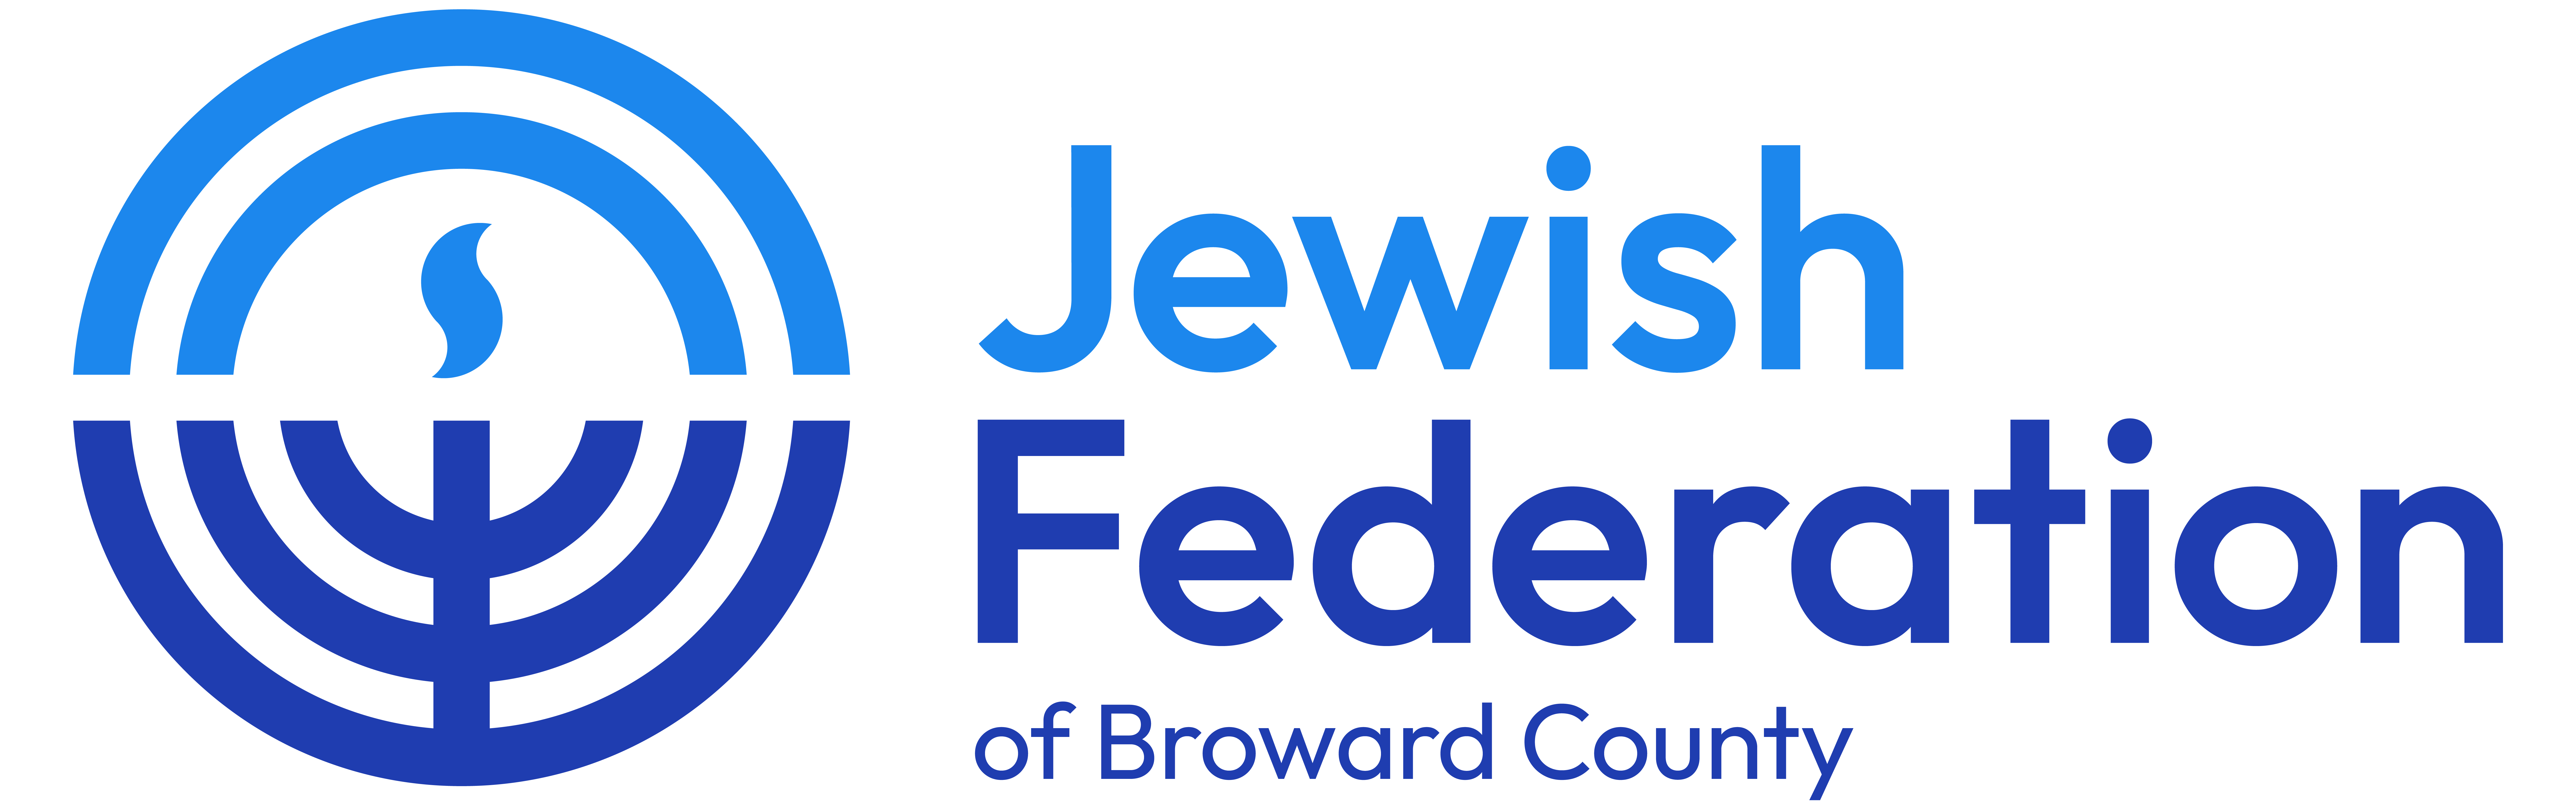 Jewish Federation of Broward County logo